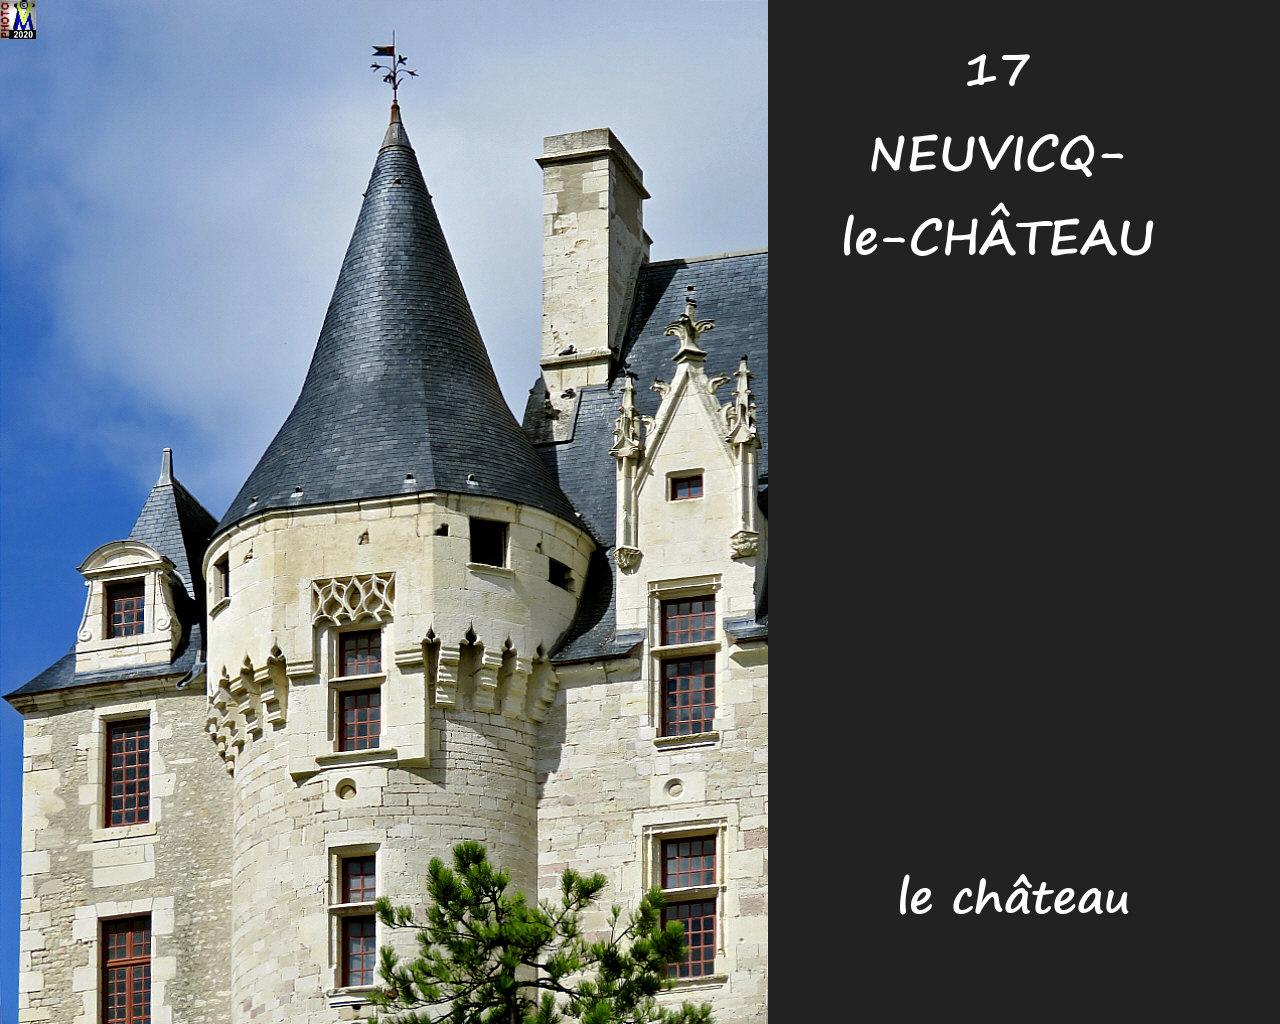 17NEUVICQ-CHATEAU_chateau_1022.jpg